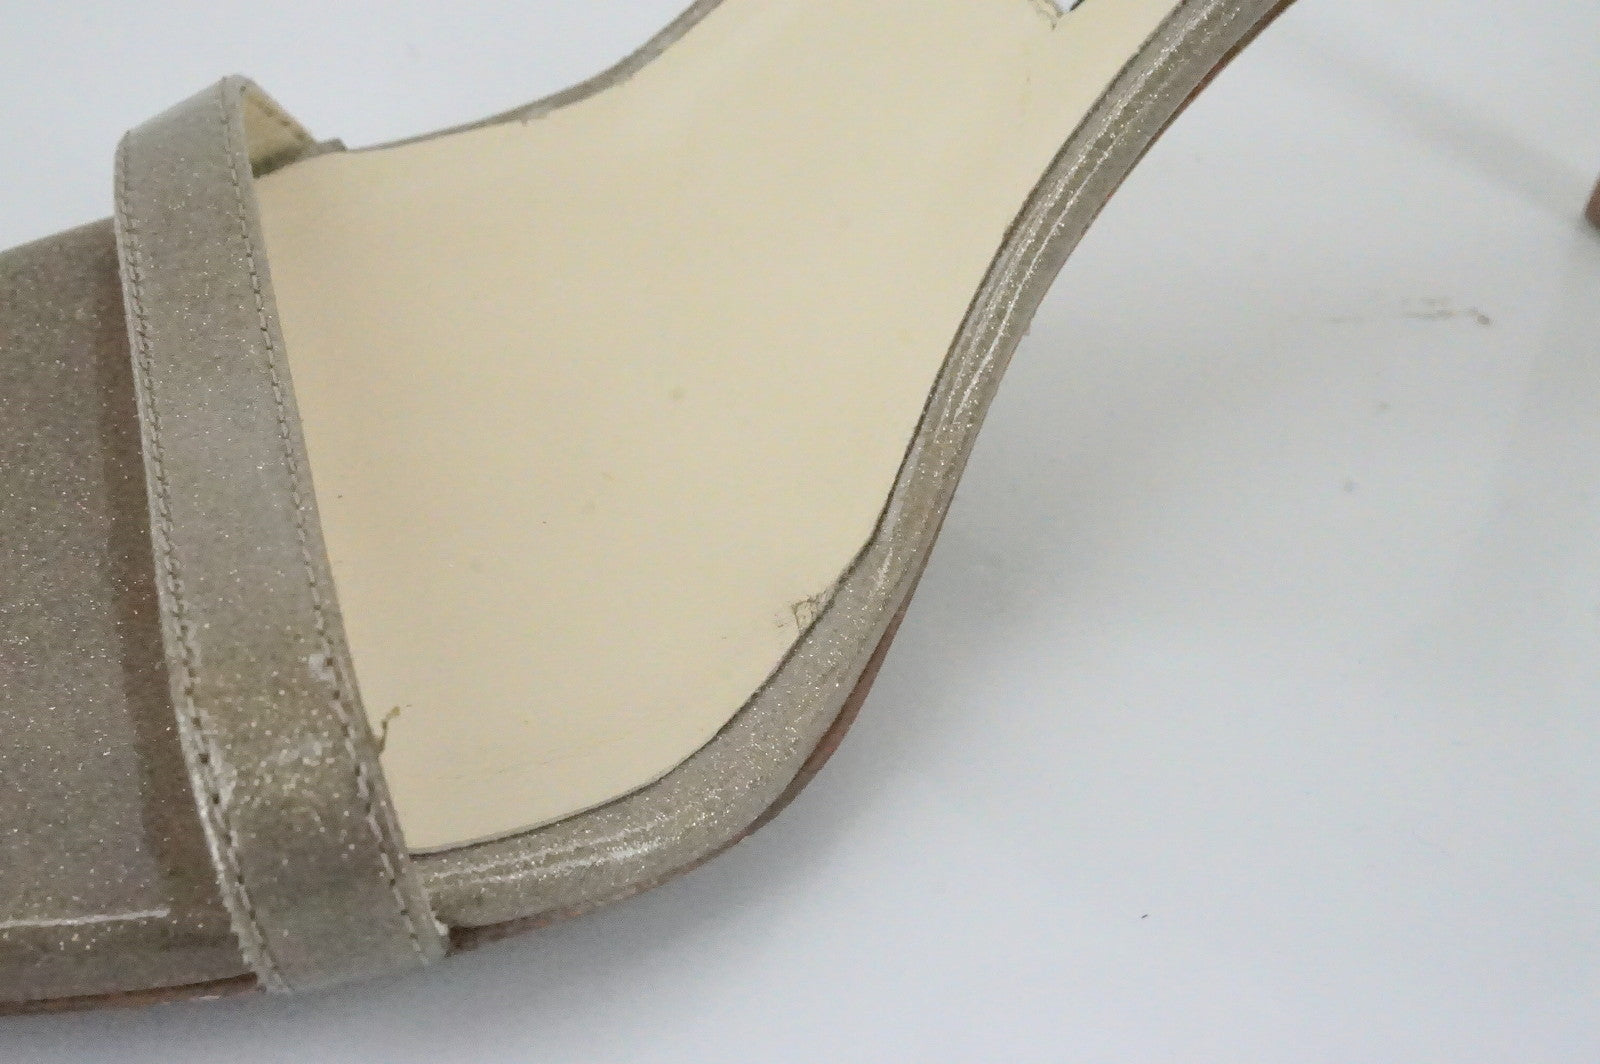 Jimmy Choo Minny Metallic Patent Leather Ankle Strap Sandals SZ 39 New Heel $850